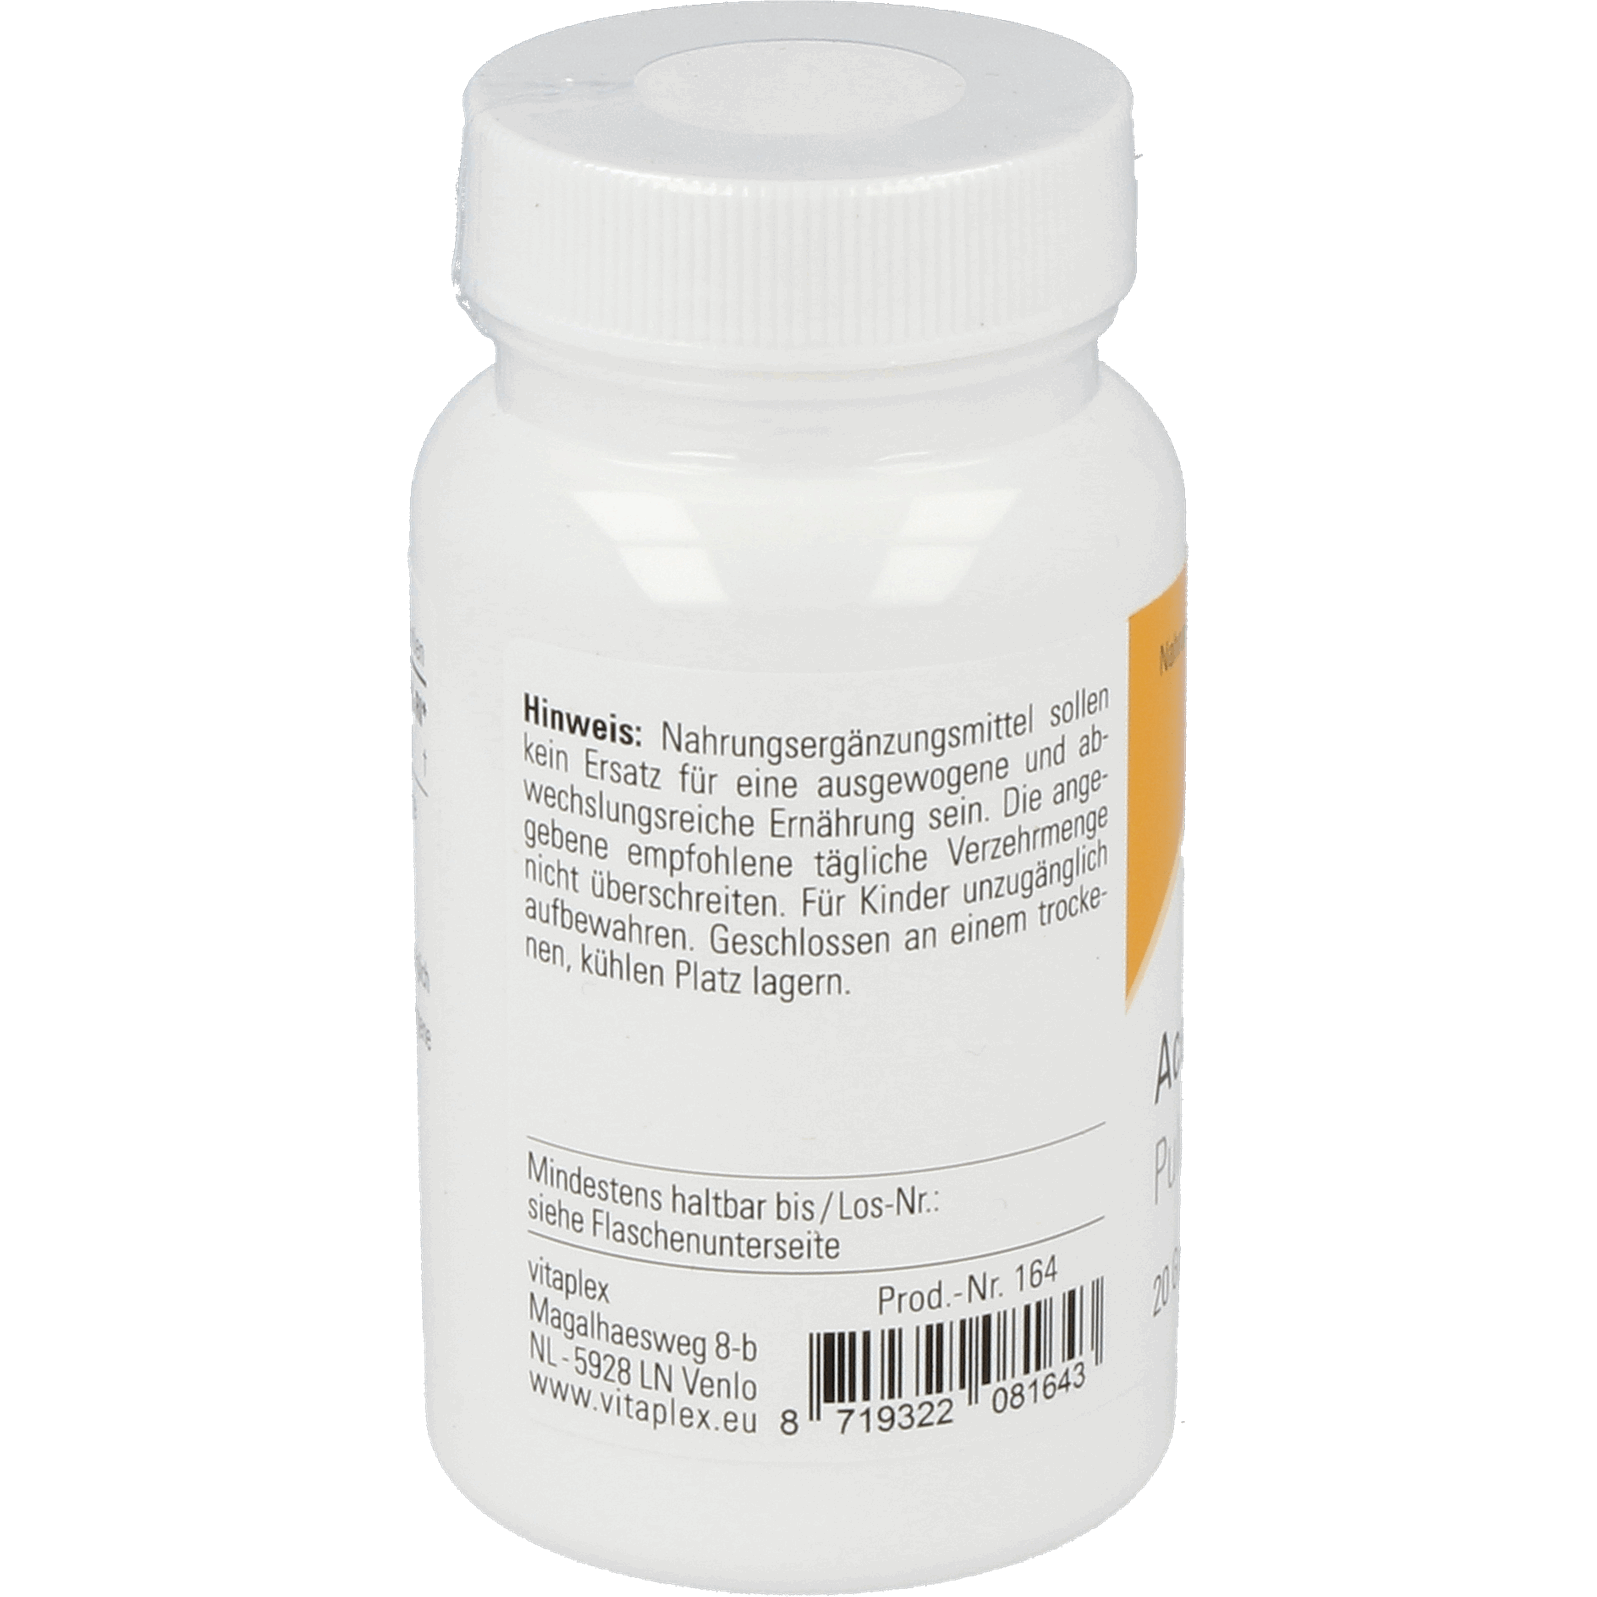 Acetyl Glutathion Powder - littlehealthstore